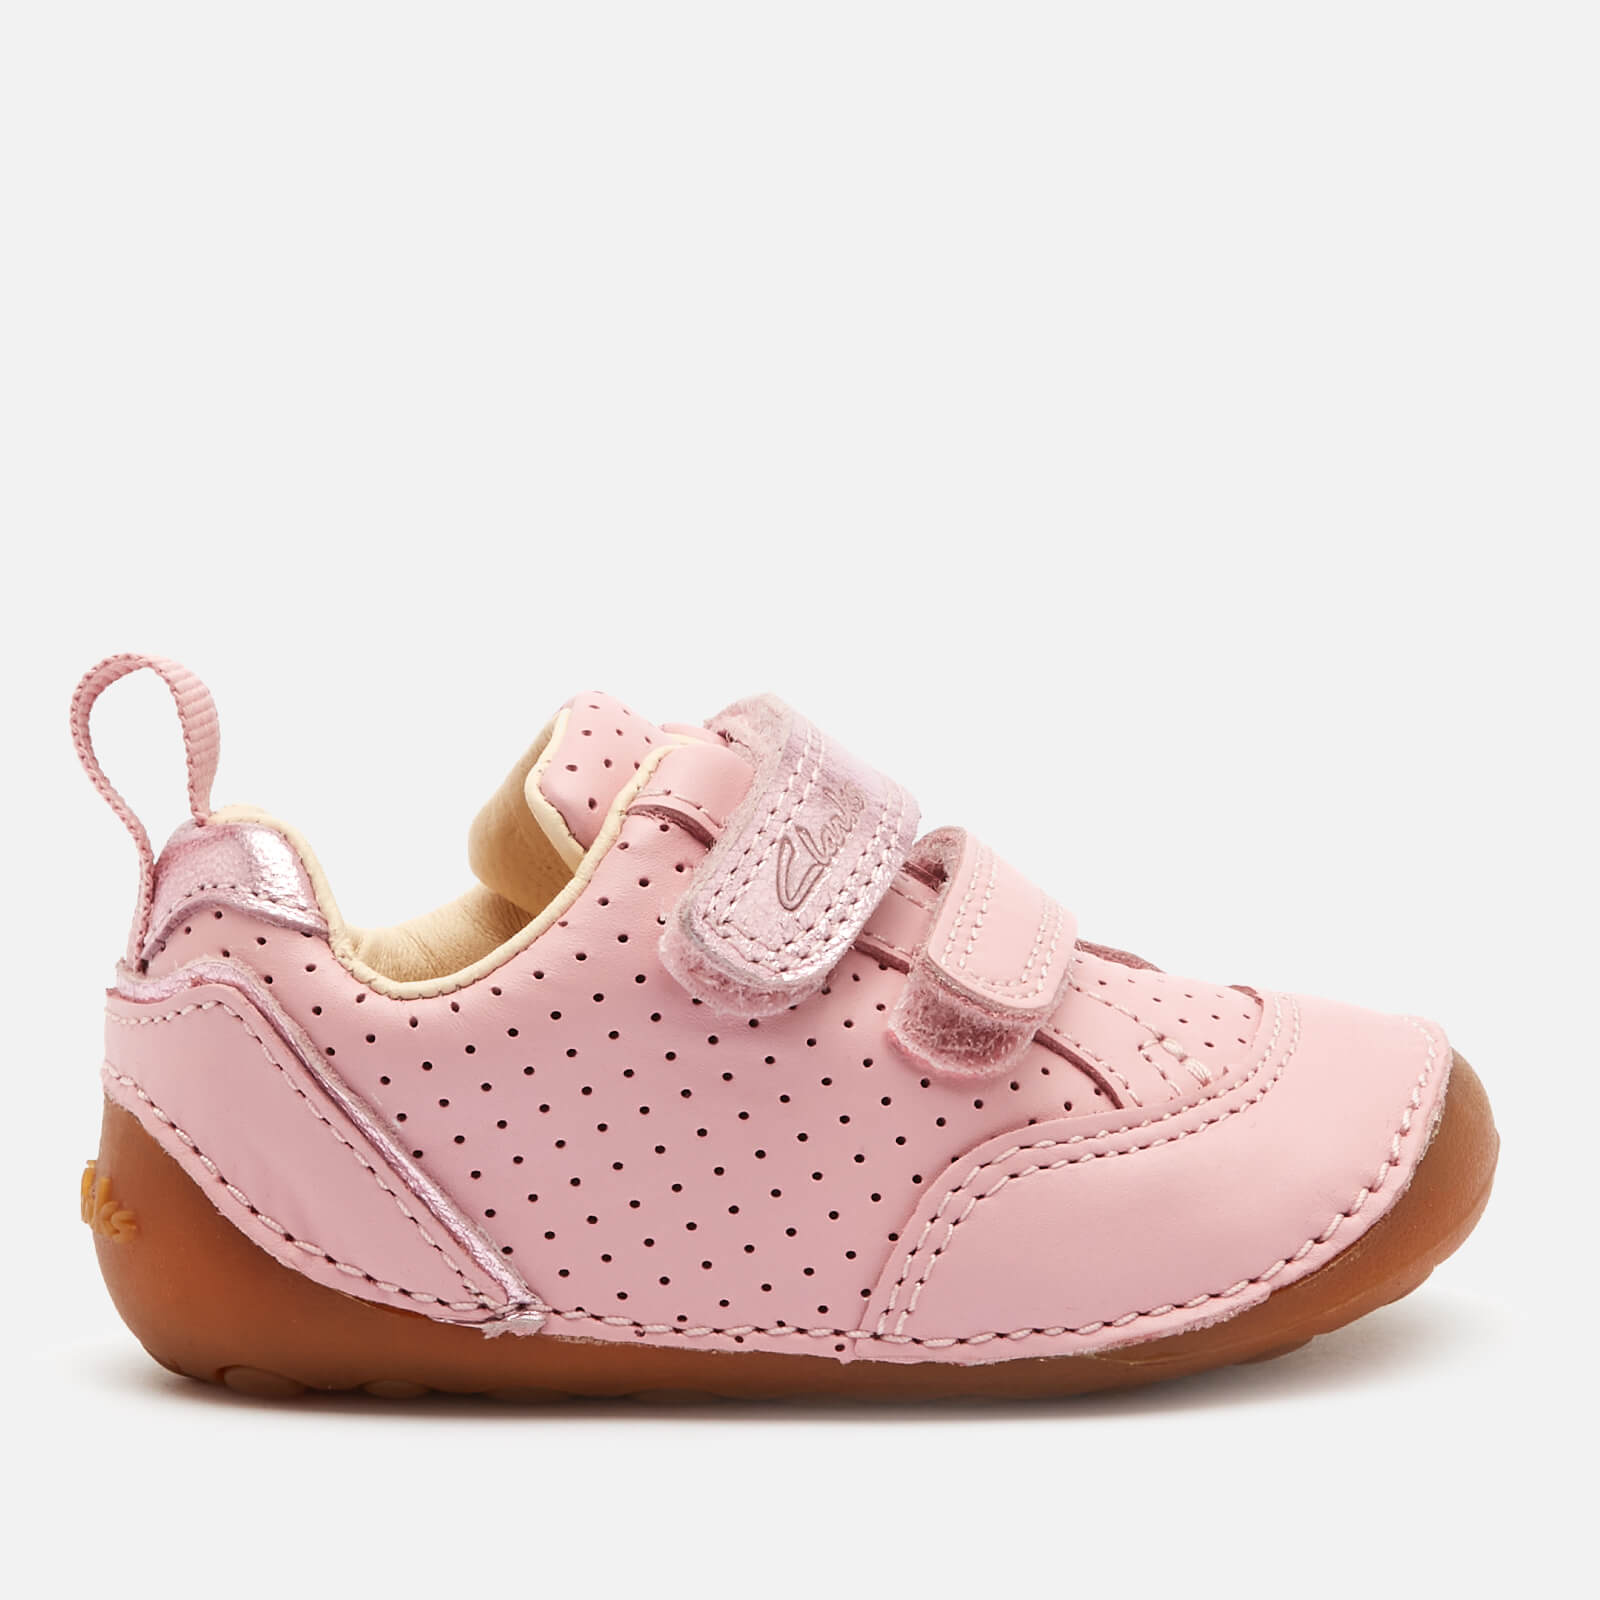 Clarks Tiny Sky Toddler Everyday Shoes - Light Pink - UK 3 Baby